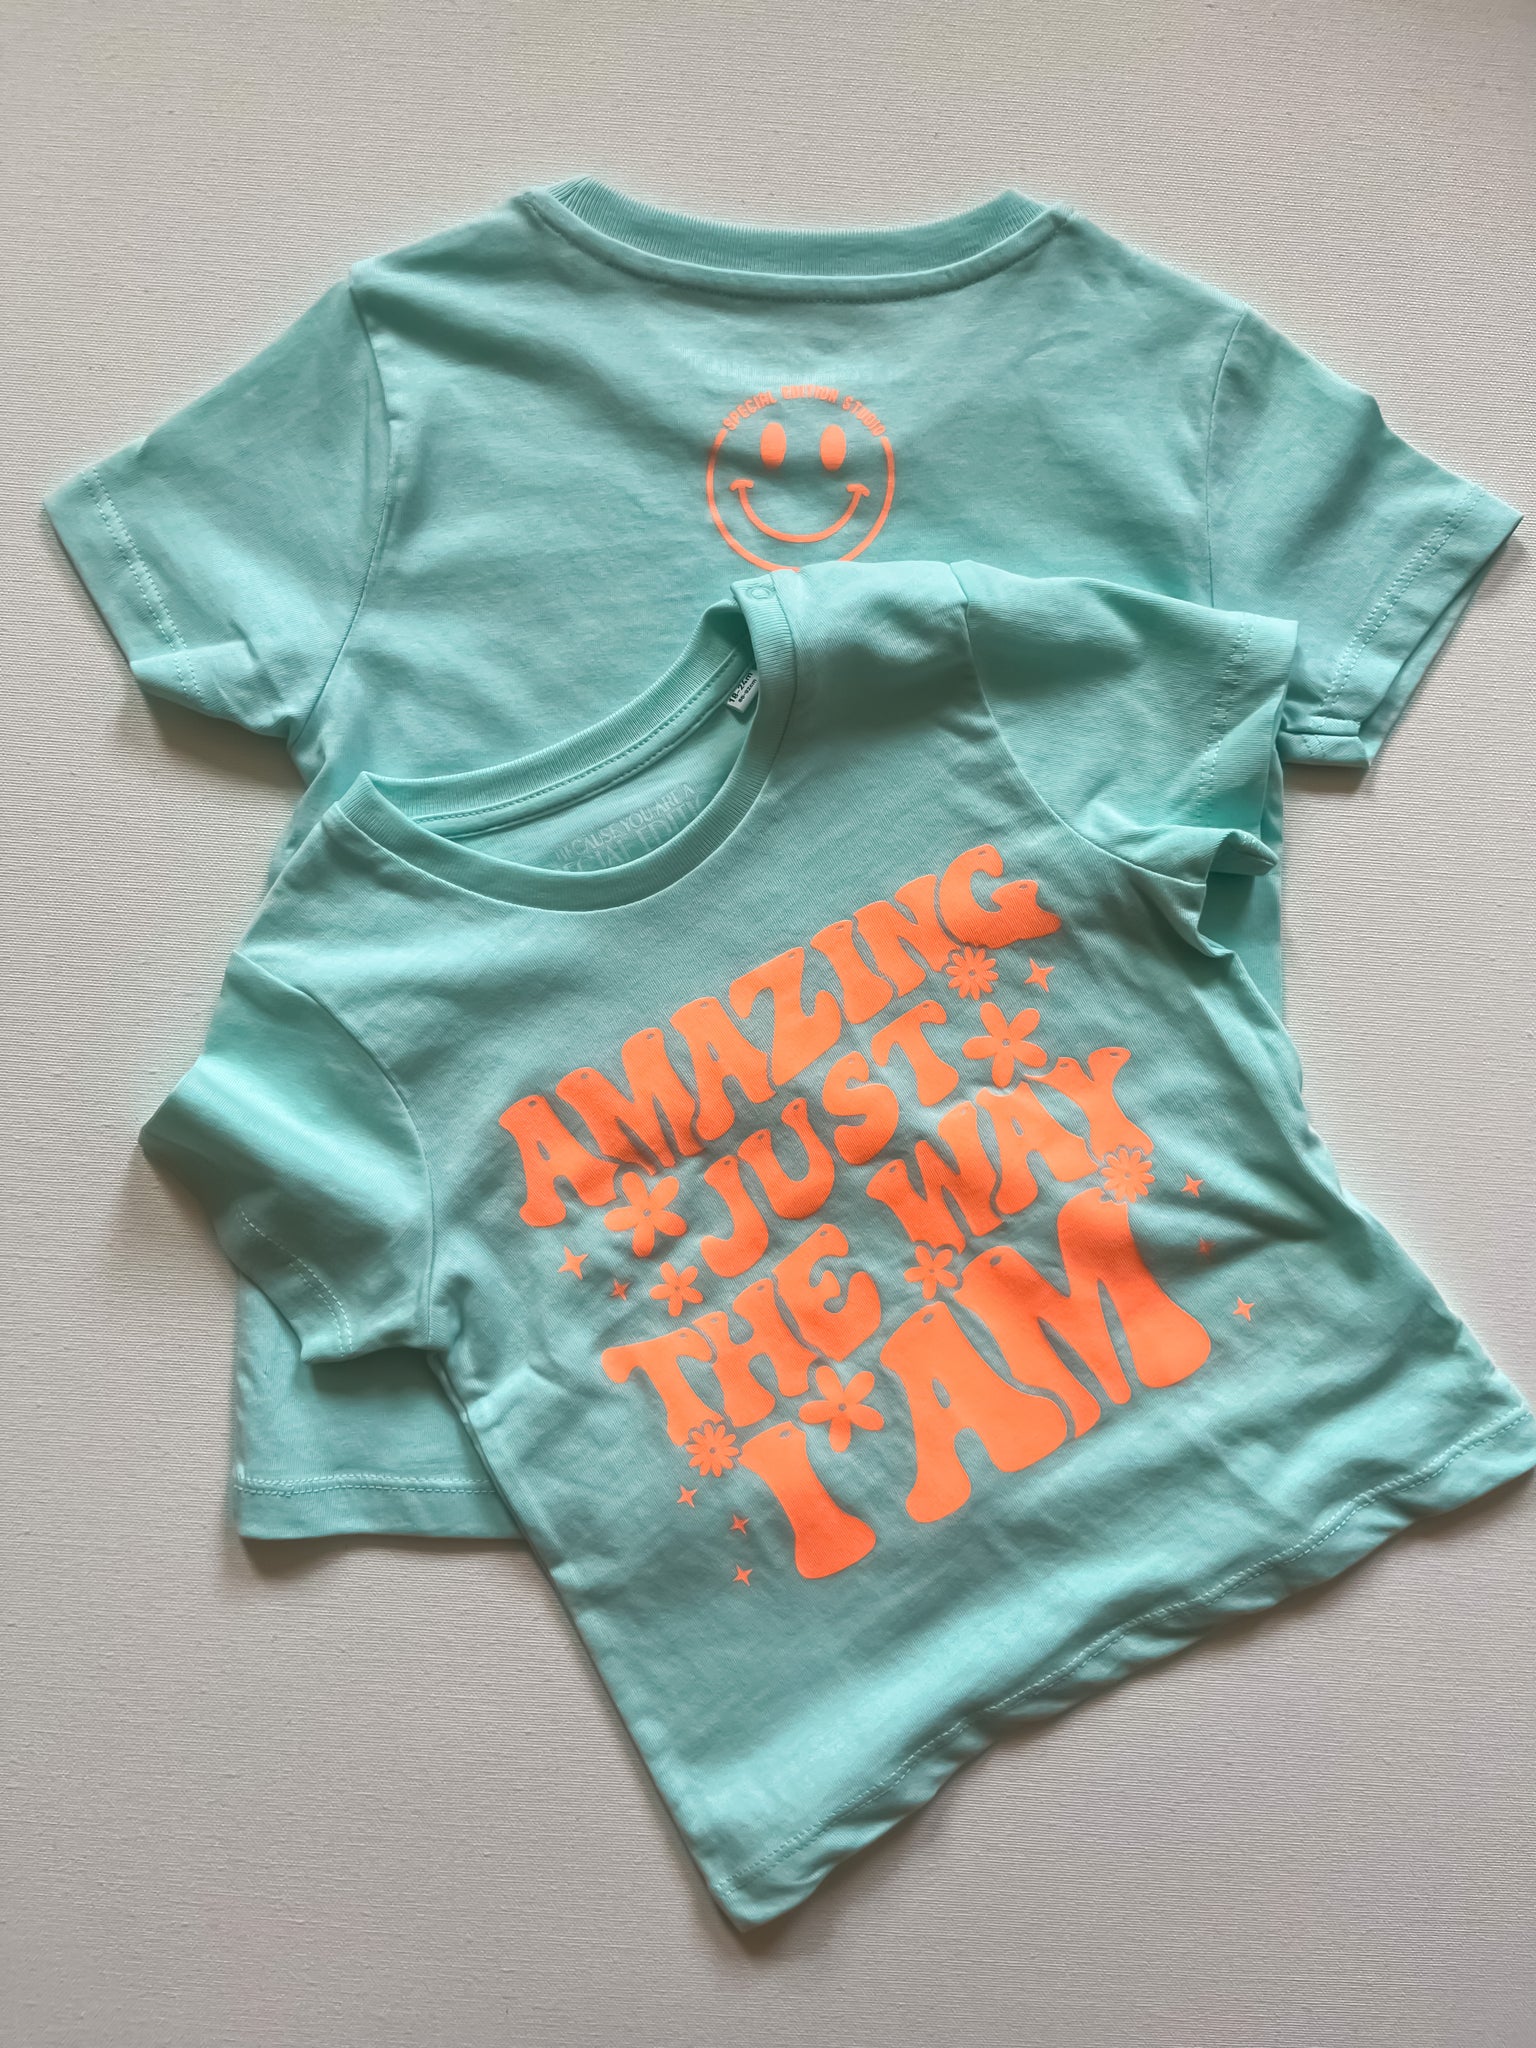 "Amazing just the way I am" Kids T-Shirt